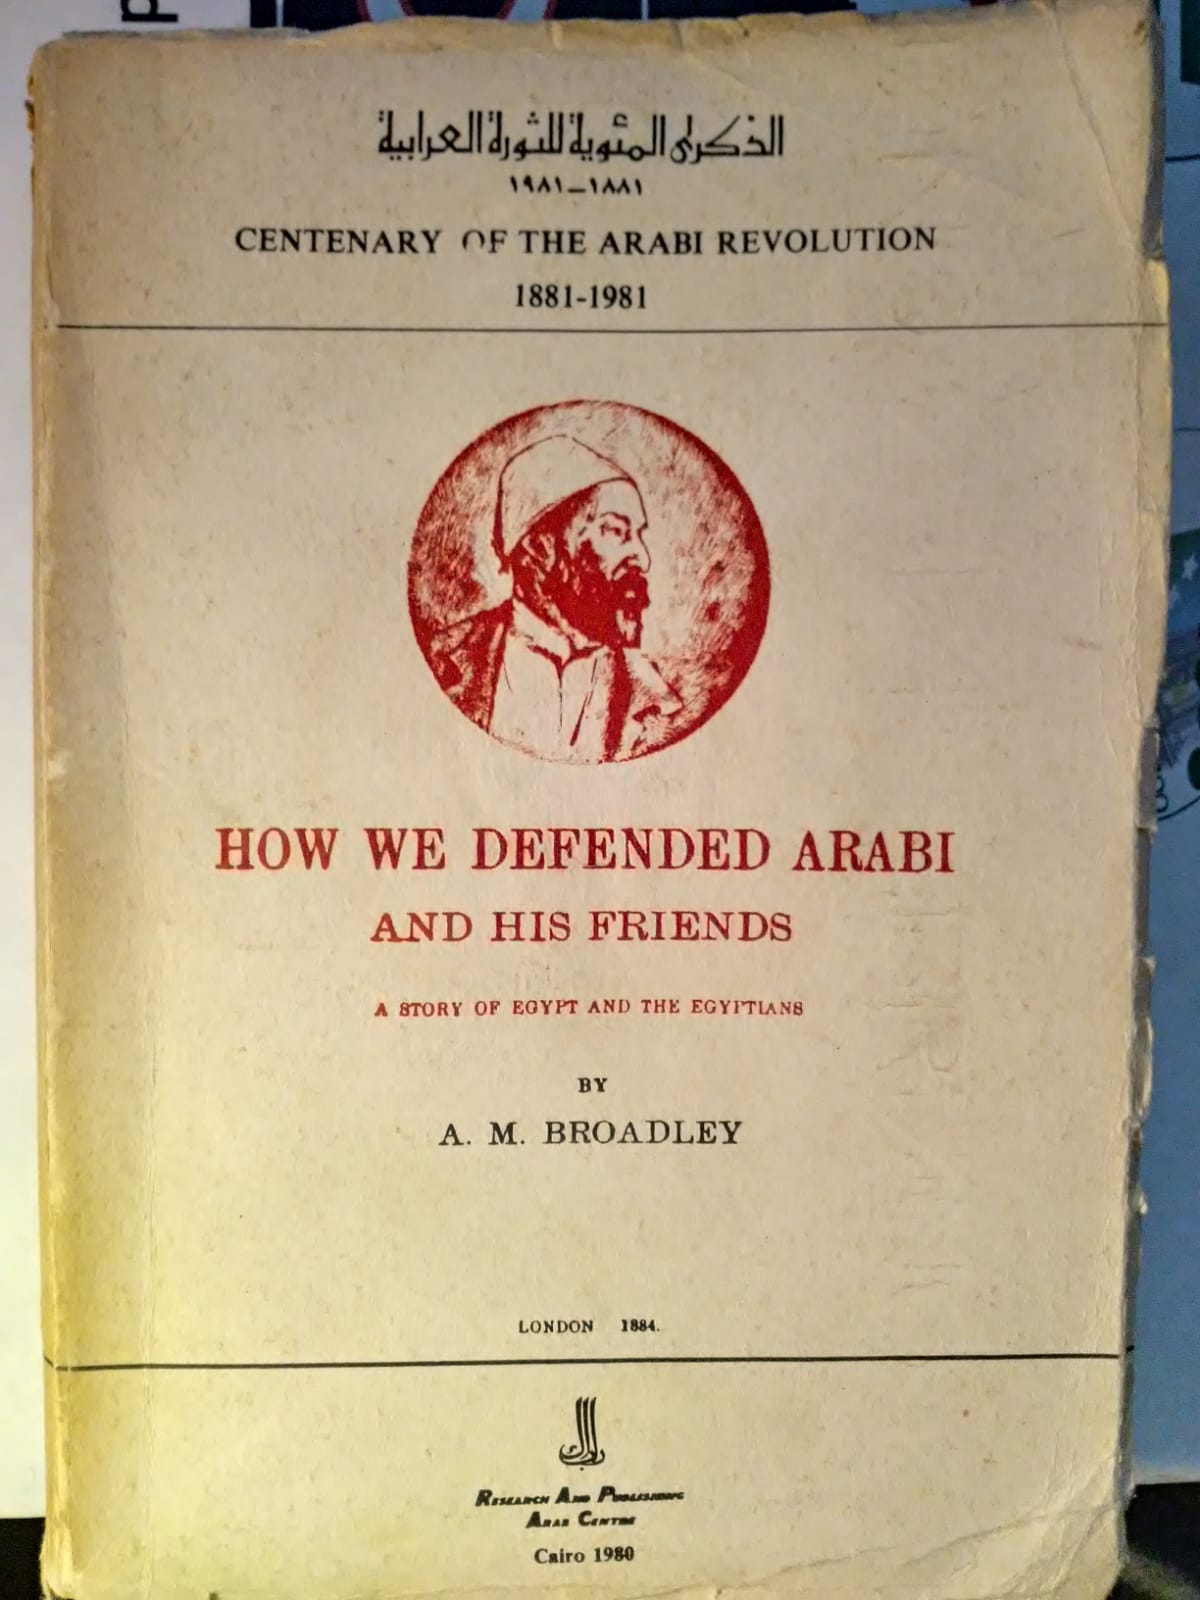 “How We Defended Arabi And His Friends” (1884) di A. M. Broadley compare improvvisamente tra le bancarelle